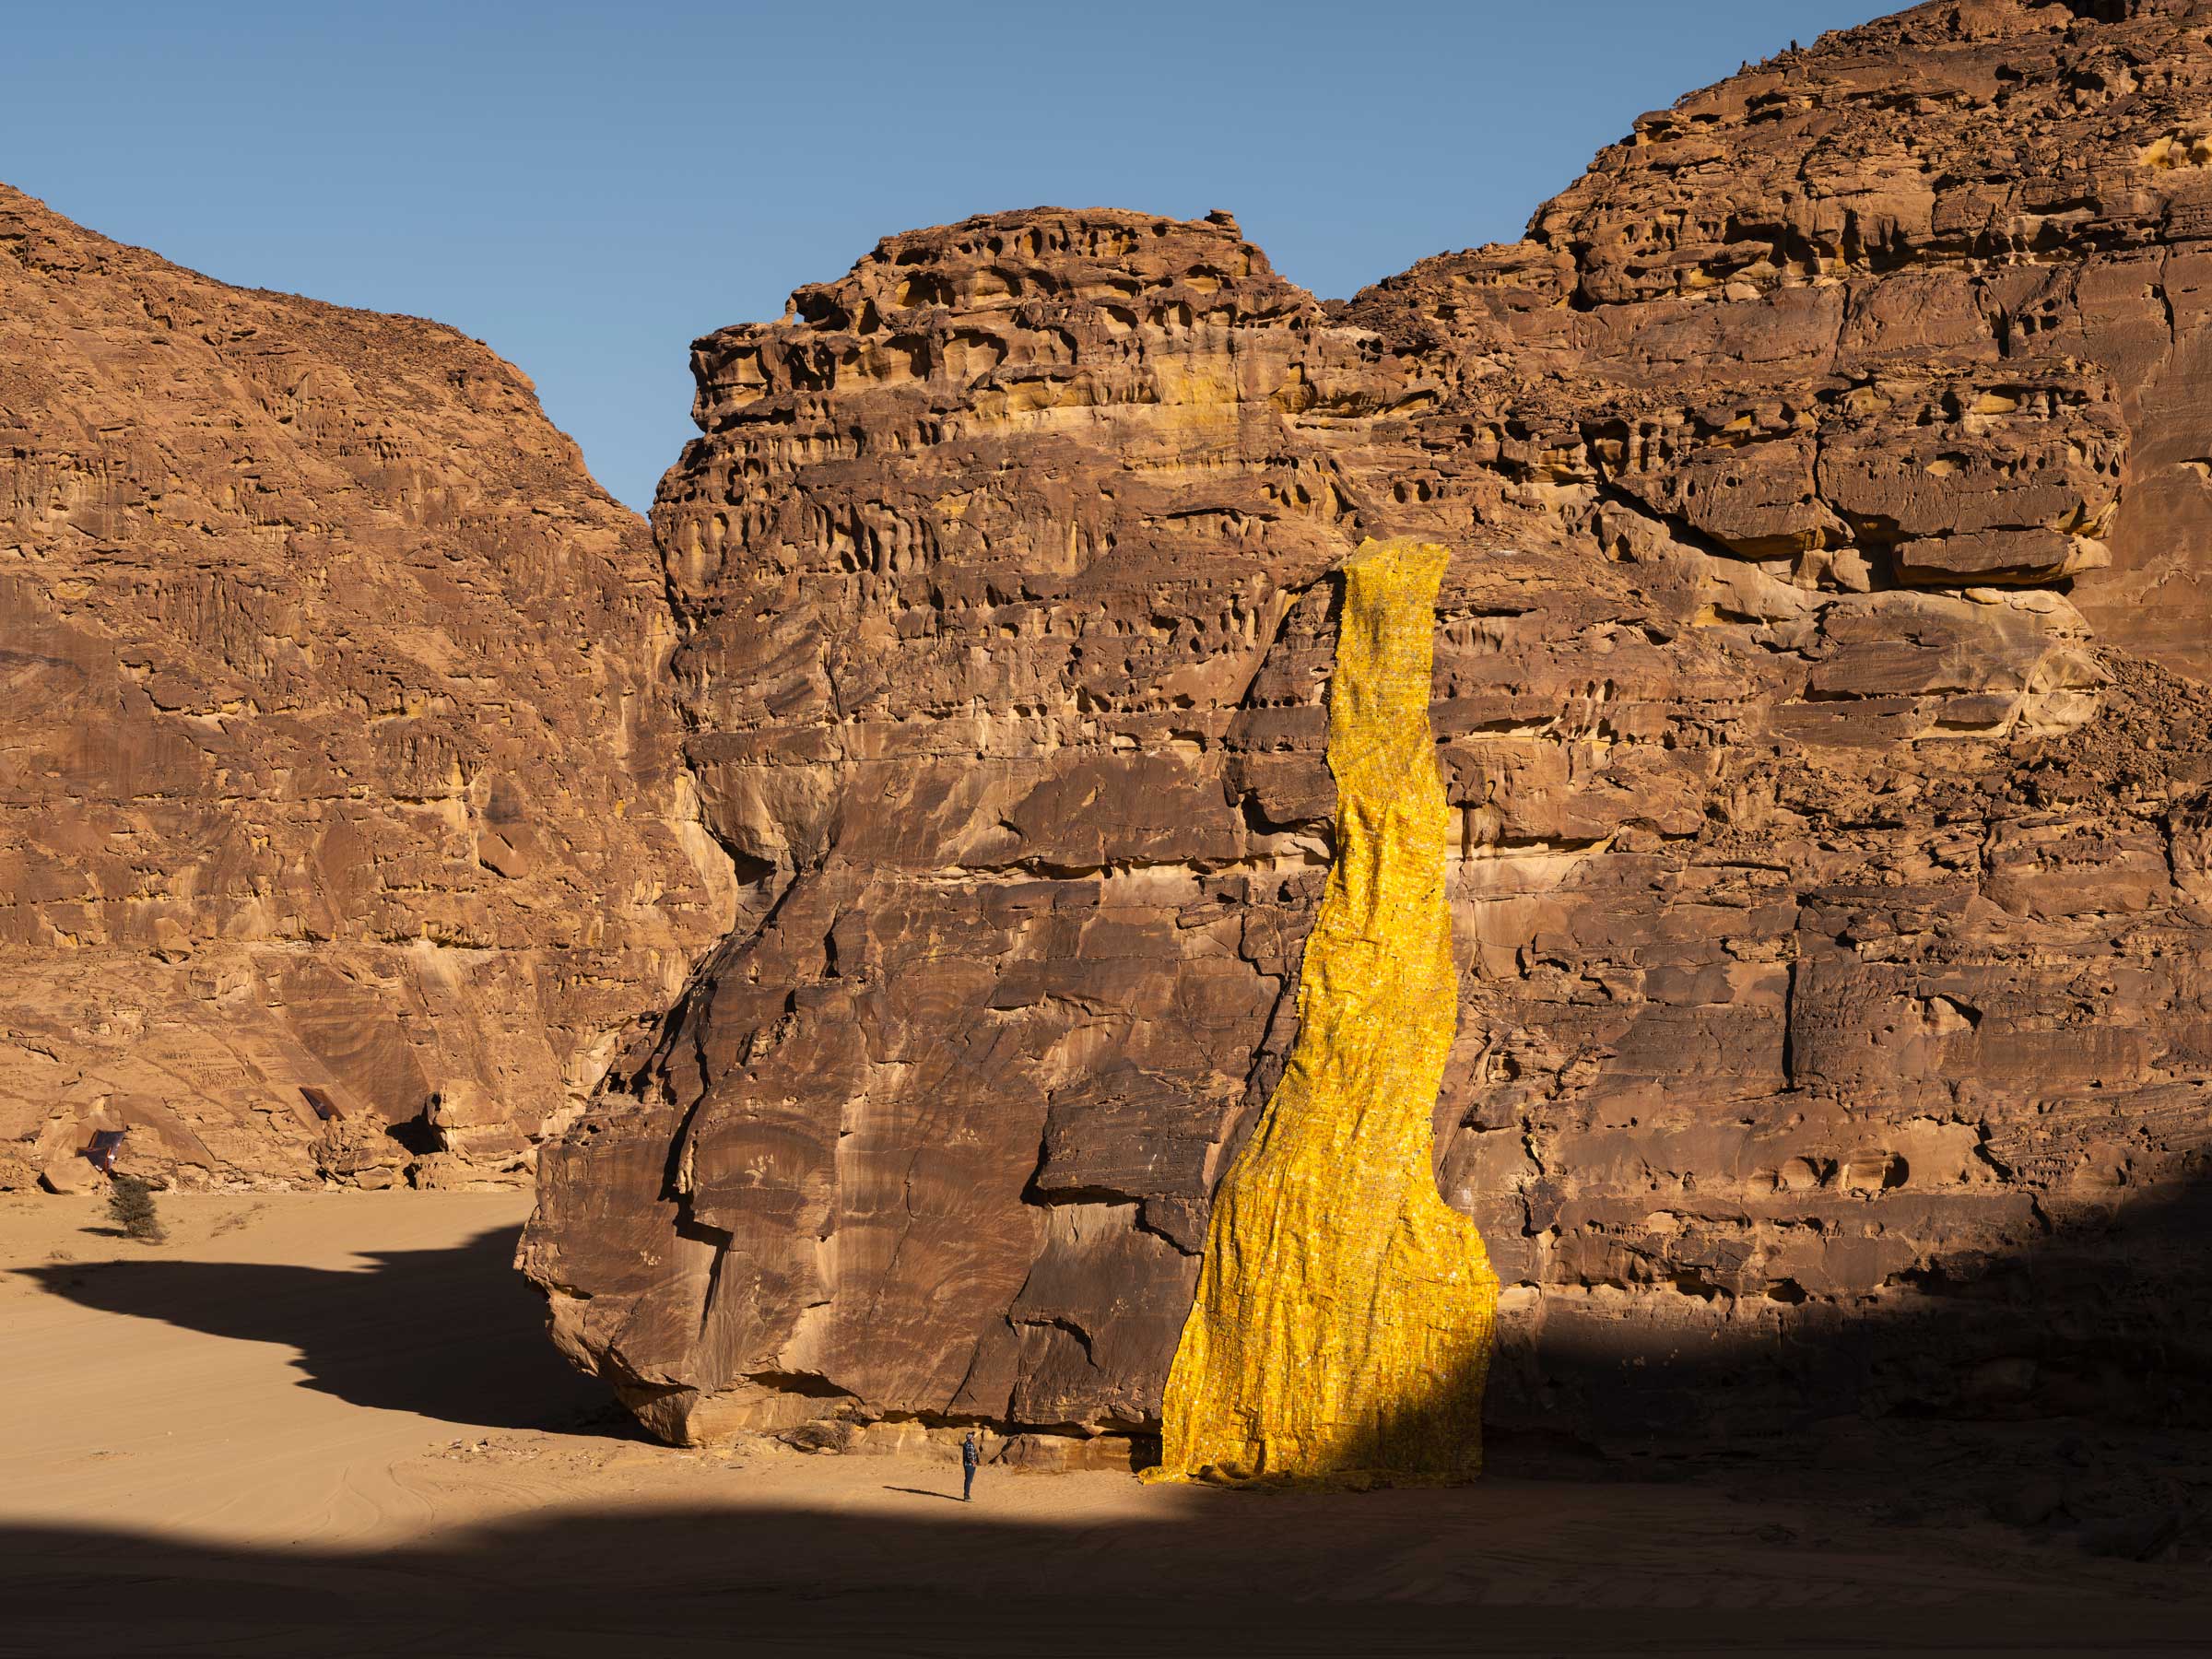 Serge Attukwei Clottey, “Gold Falls”, Desert X AlUla 2022